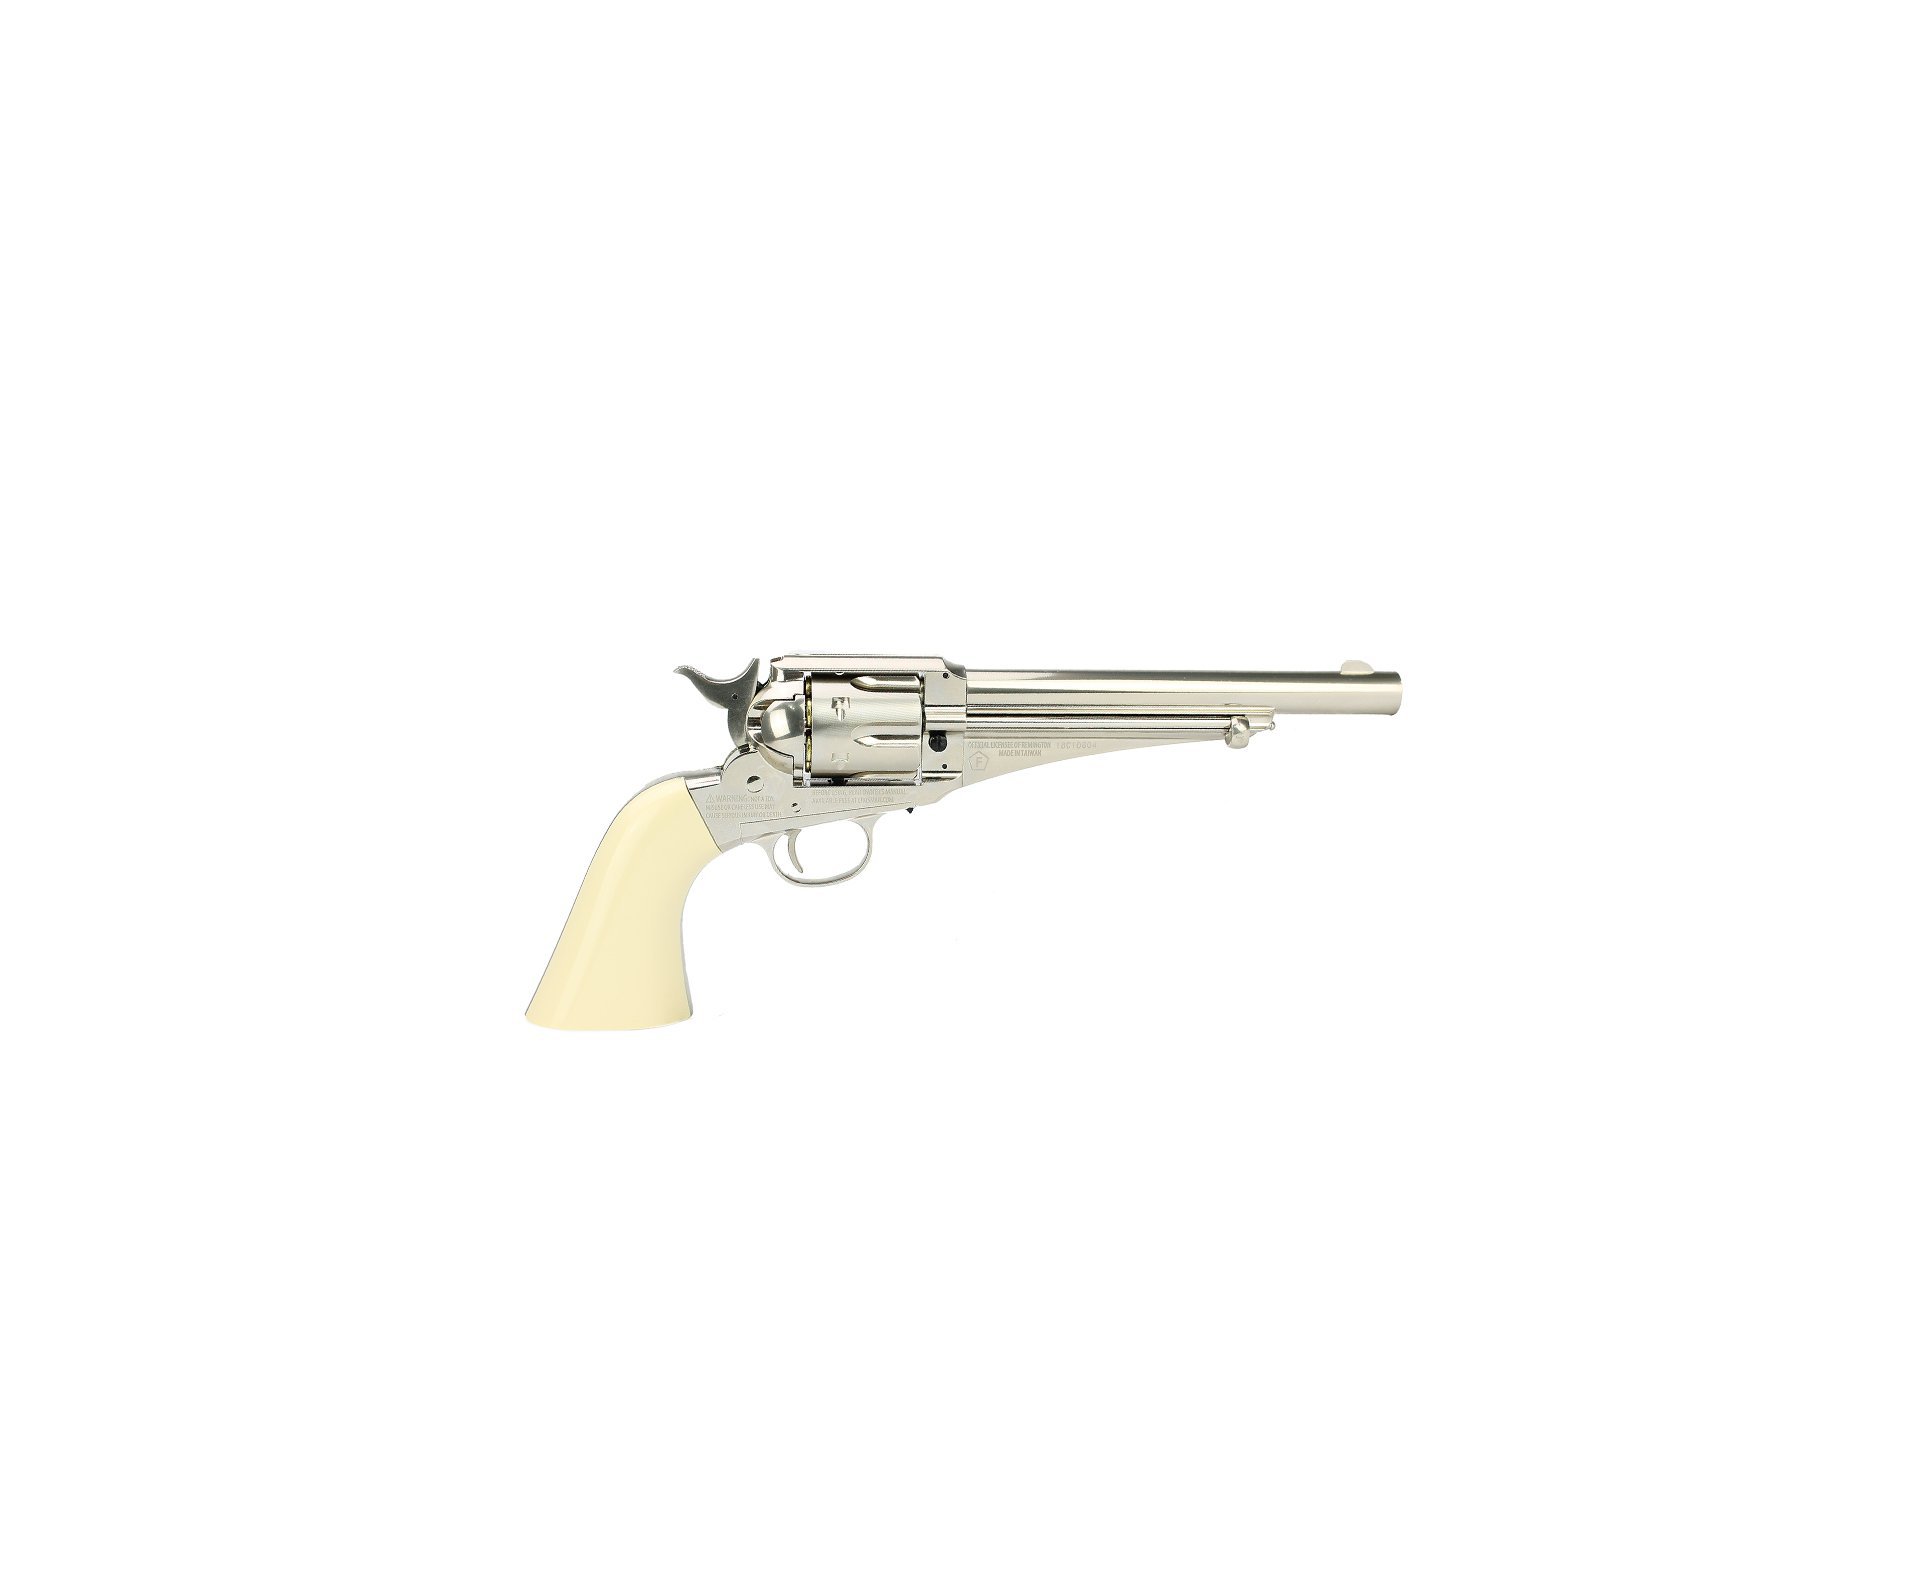 Revolver Co2 Remington Rr1875 Full Metal 6" Cano Cal 4,5mm